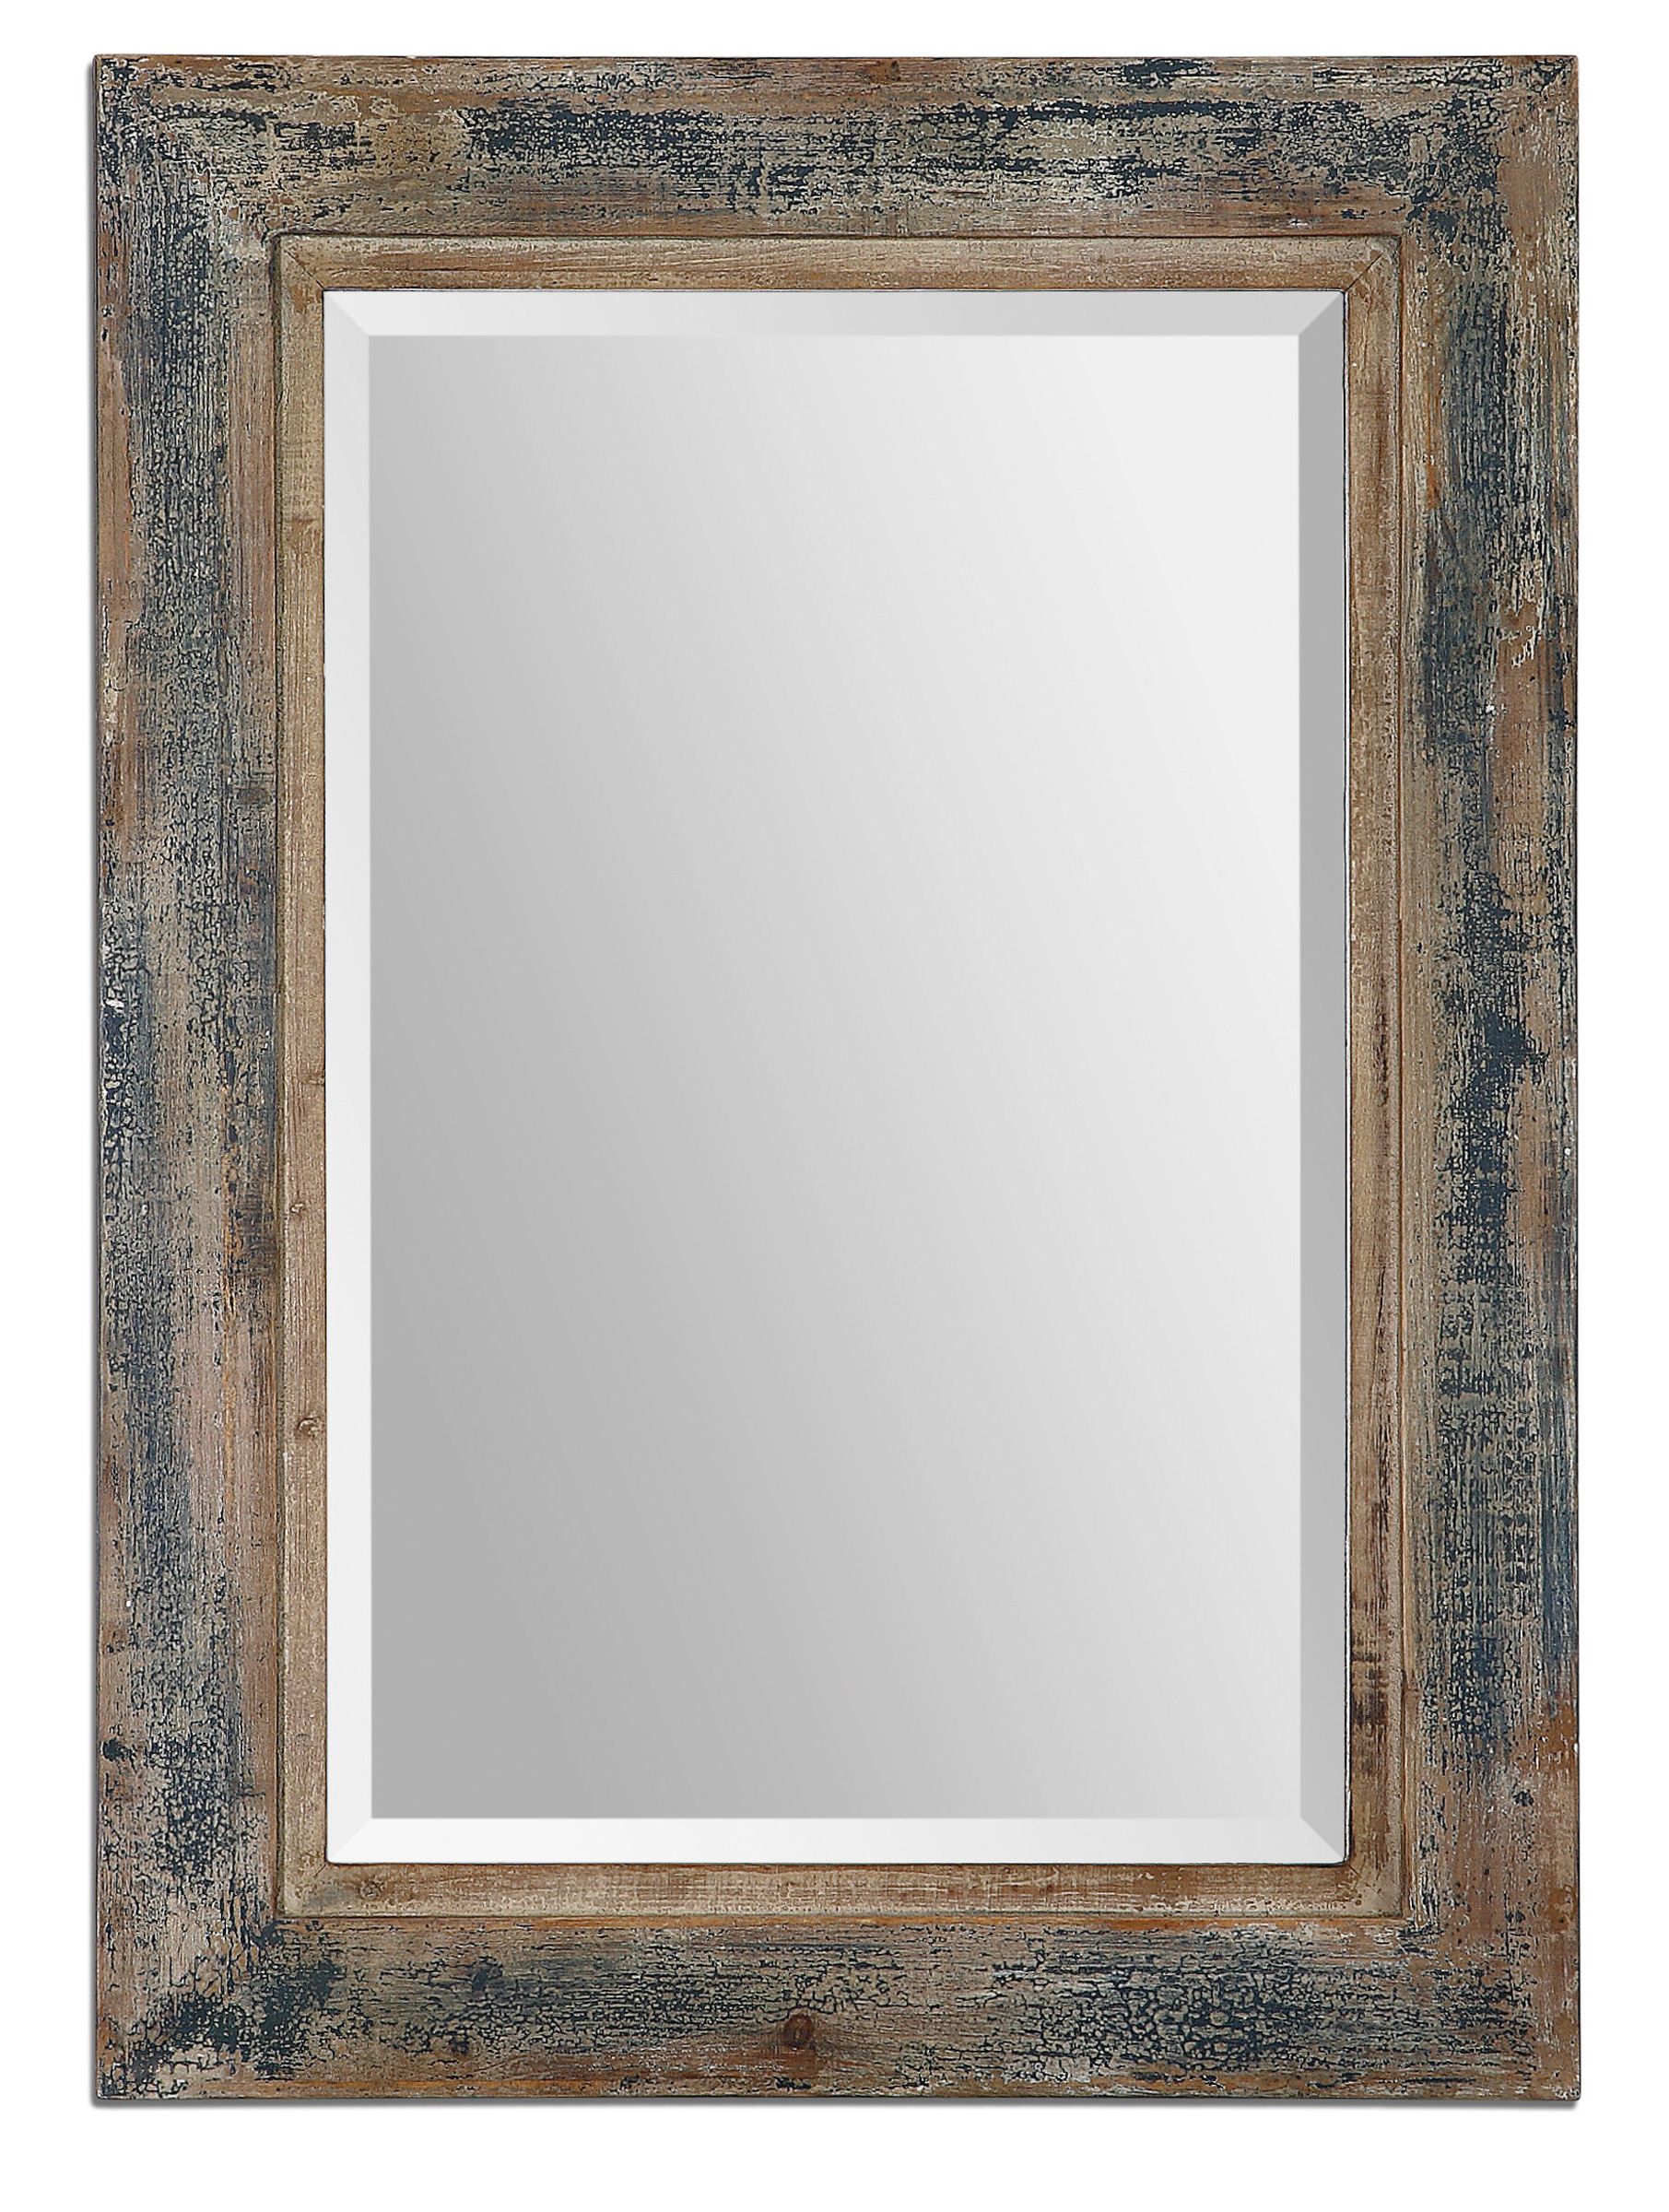 Popular Janie Rectangular Wall Mirrors With Regard To Janie Rectangular Wall Mirror (View 1 of 20)